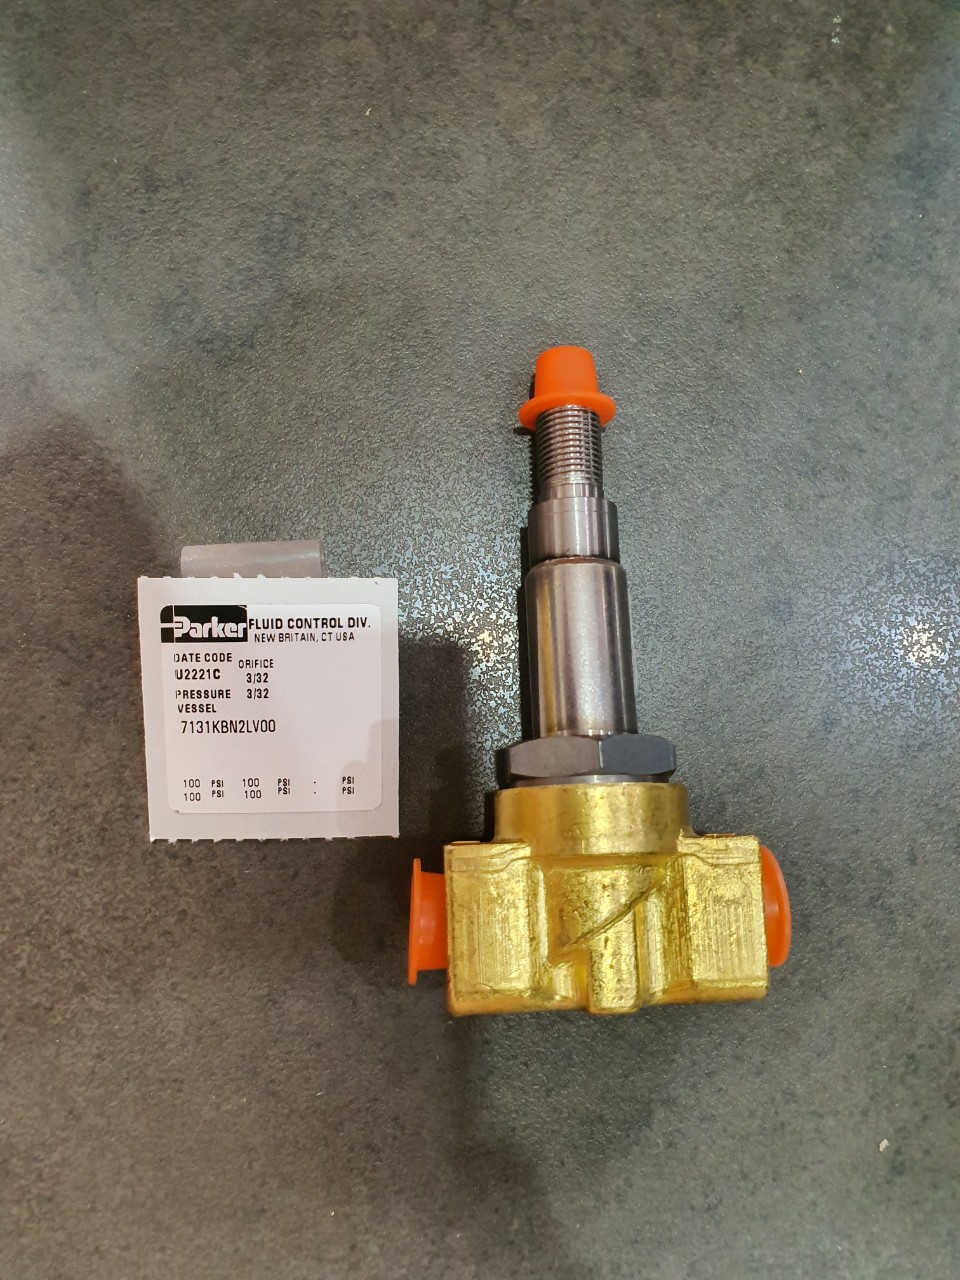 7131KBN2LV00  parker solenoid valve